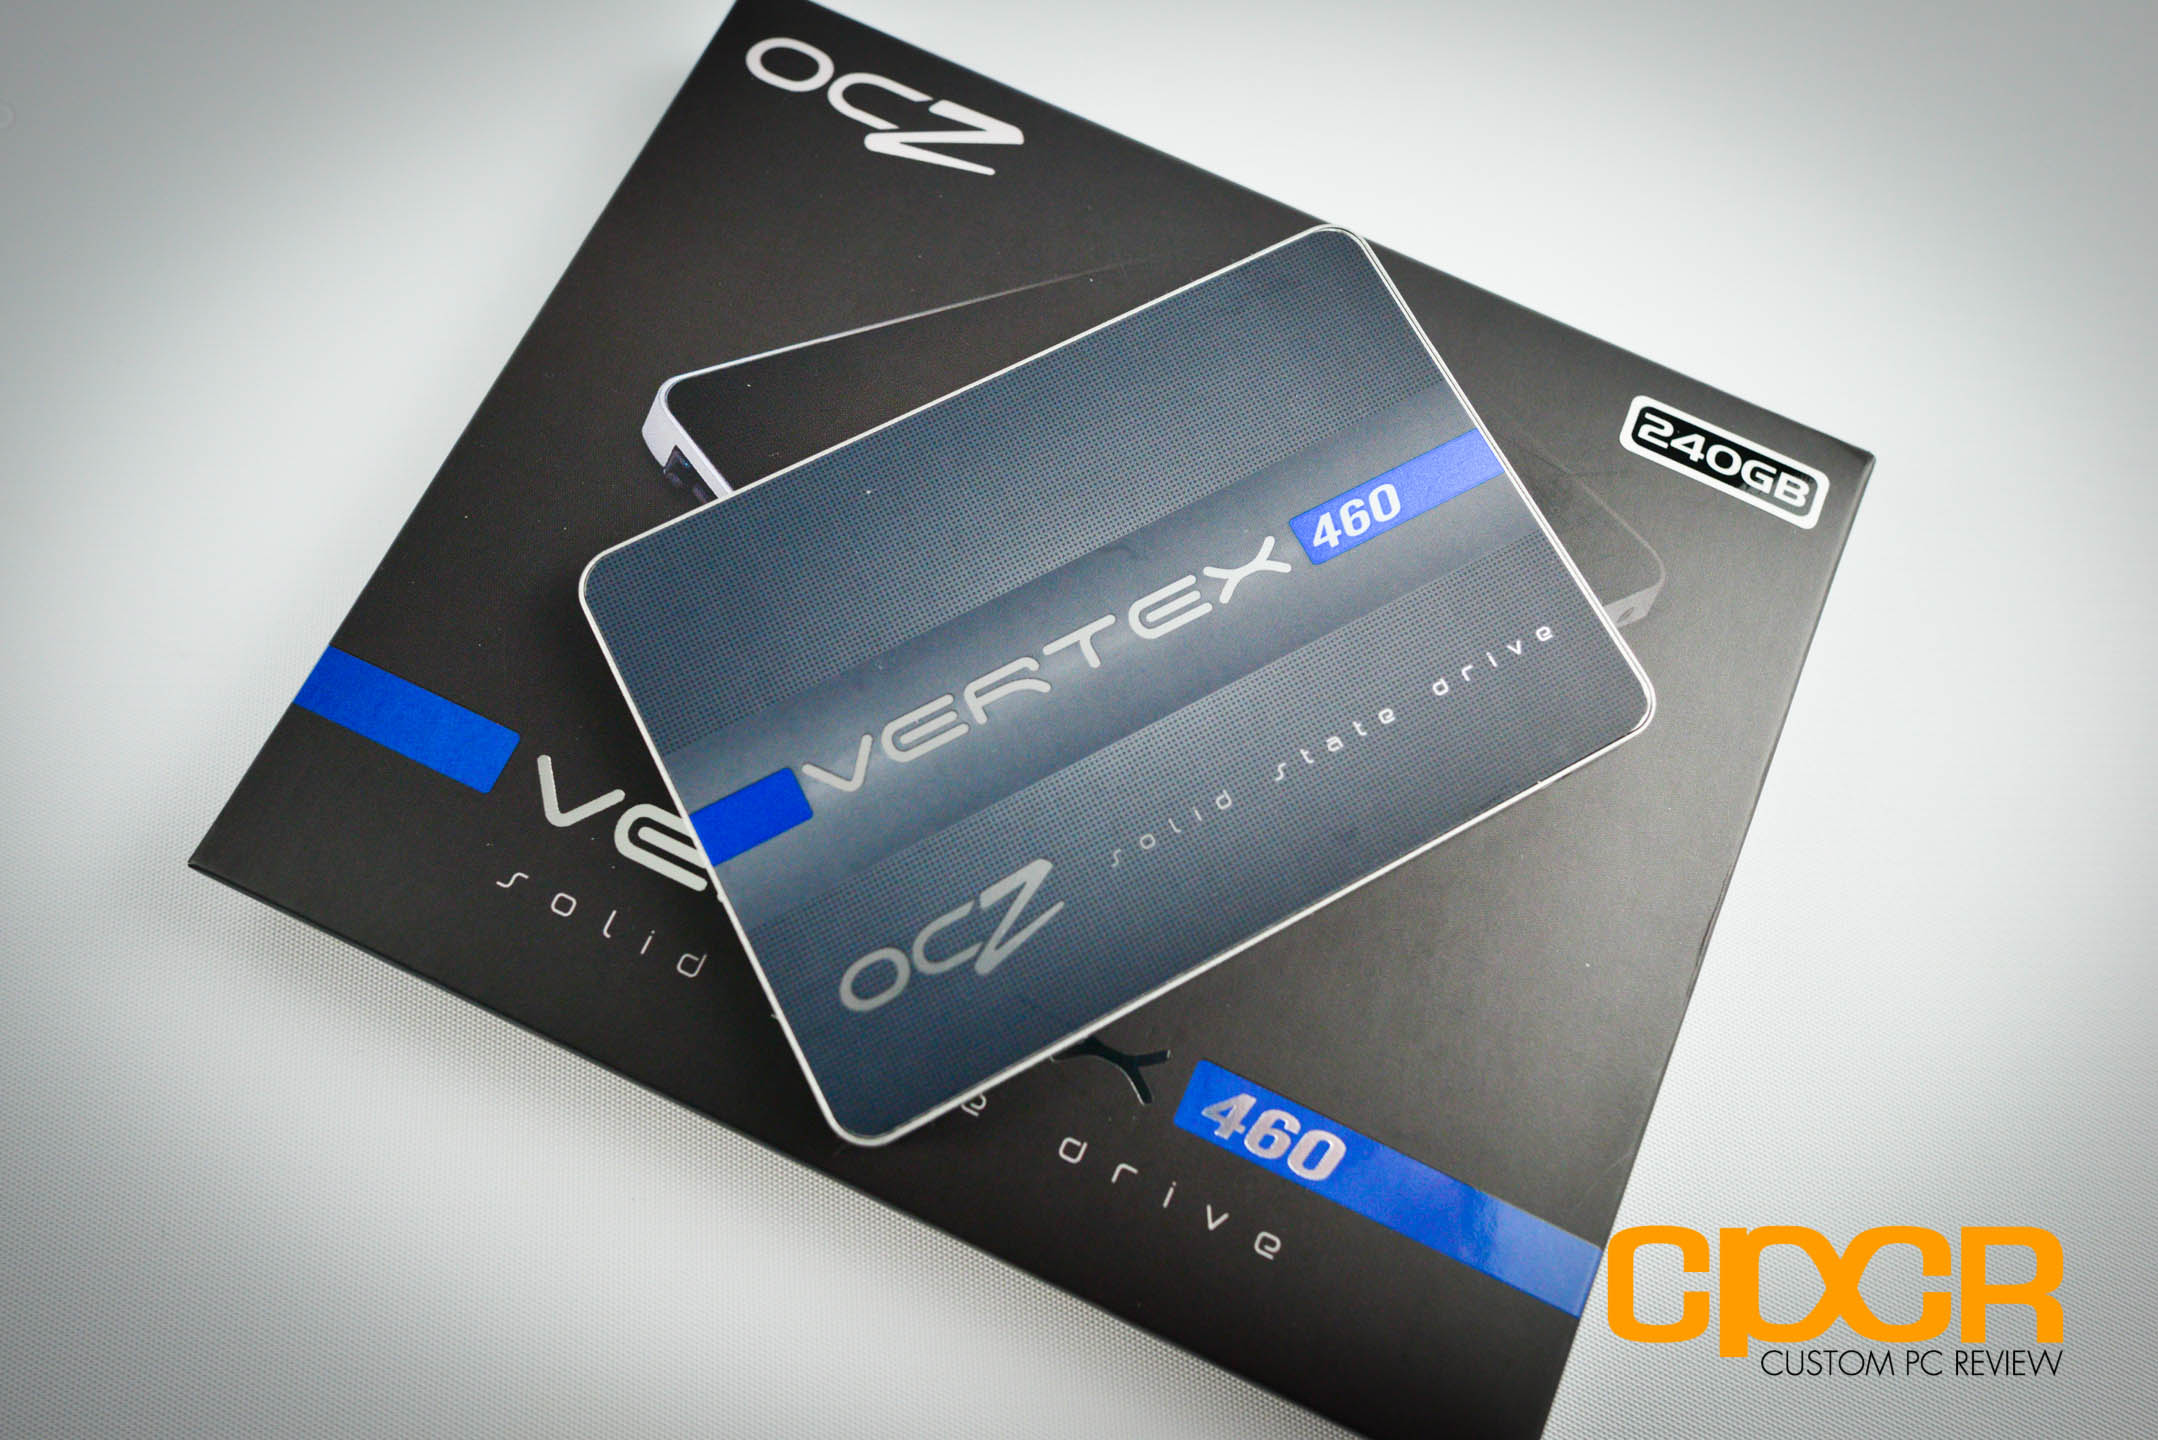 Review: OCZ Vertex 460 240GB SSD